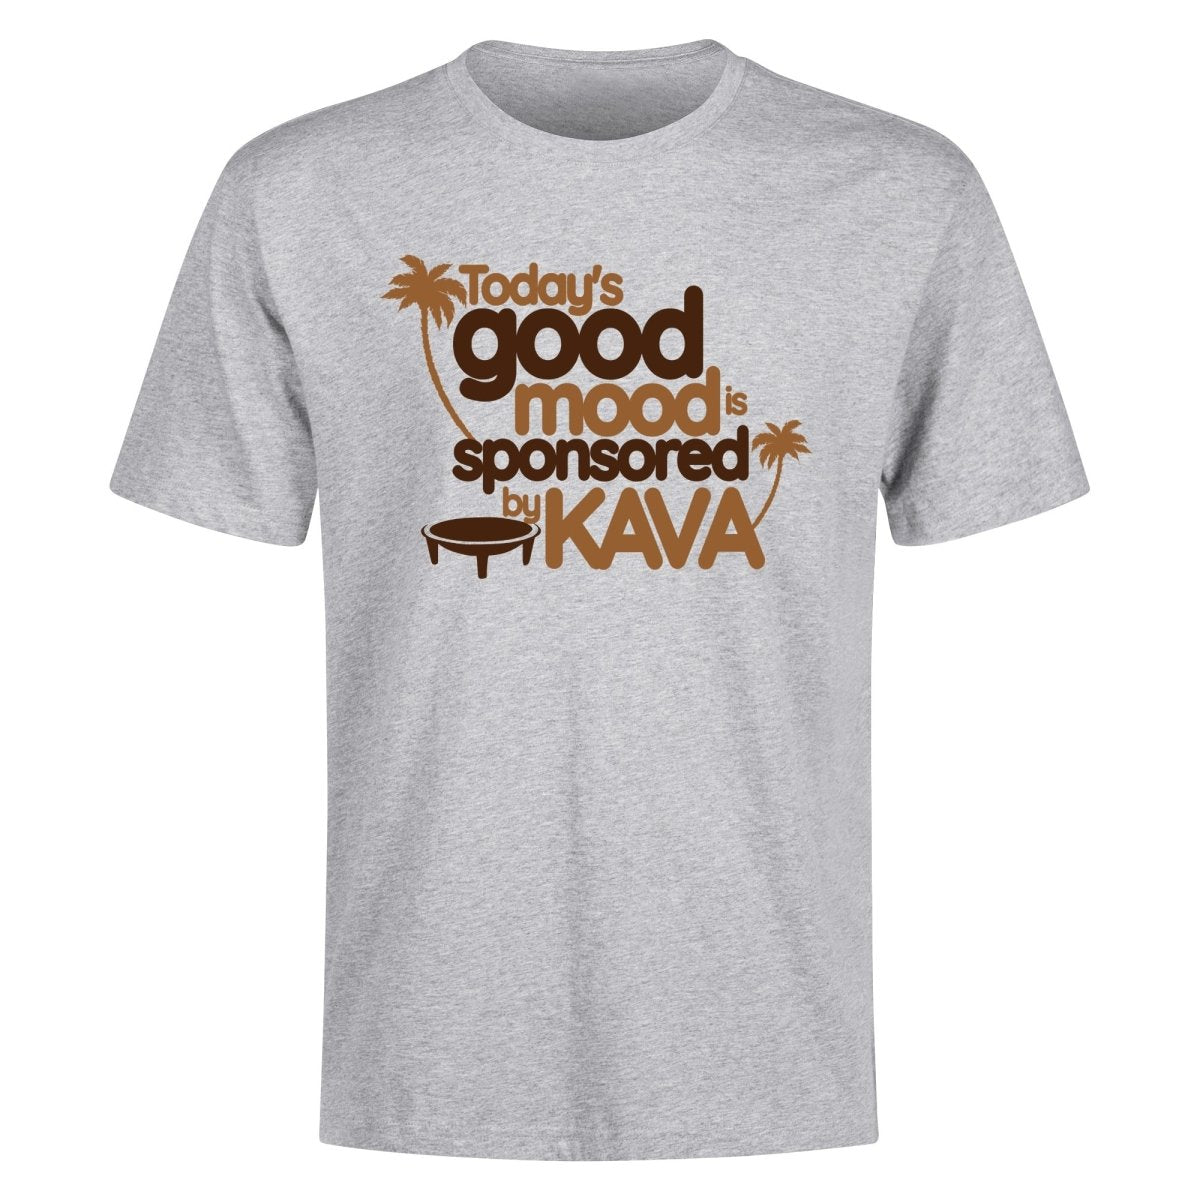 Todays Good Mood is Sponsored by Kava T-Shirt - Nesian Kulture